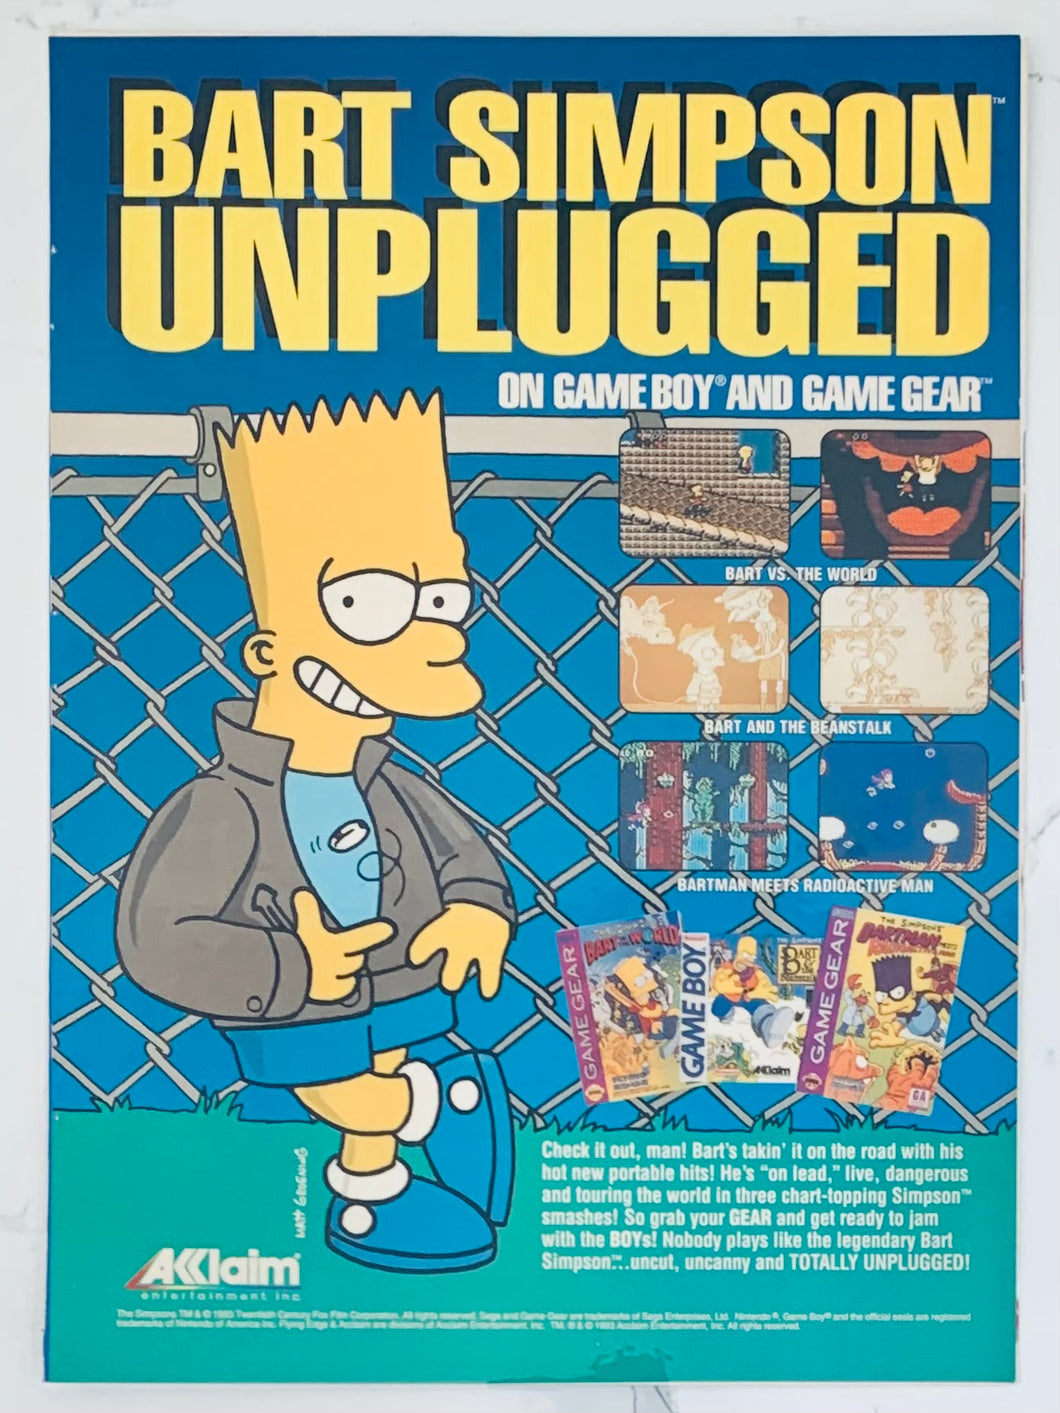 “Bart Simpson Unplugged” / Spider-Man X-Men - GameBoy / GameGear - Original Vintage Advertisement - Print Ads - Laminated A4 Poster